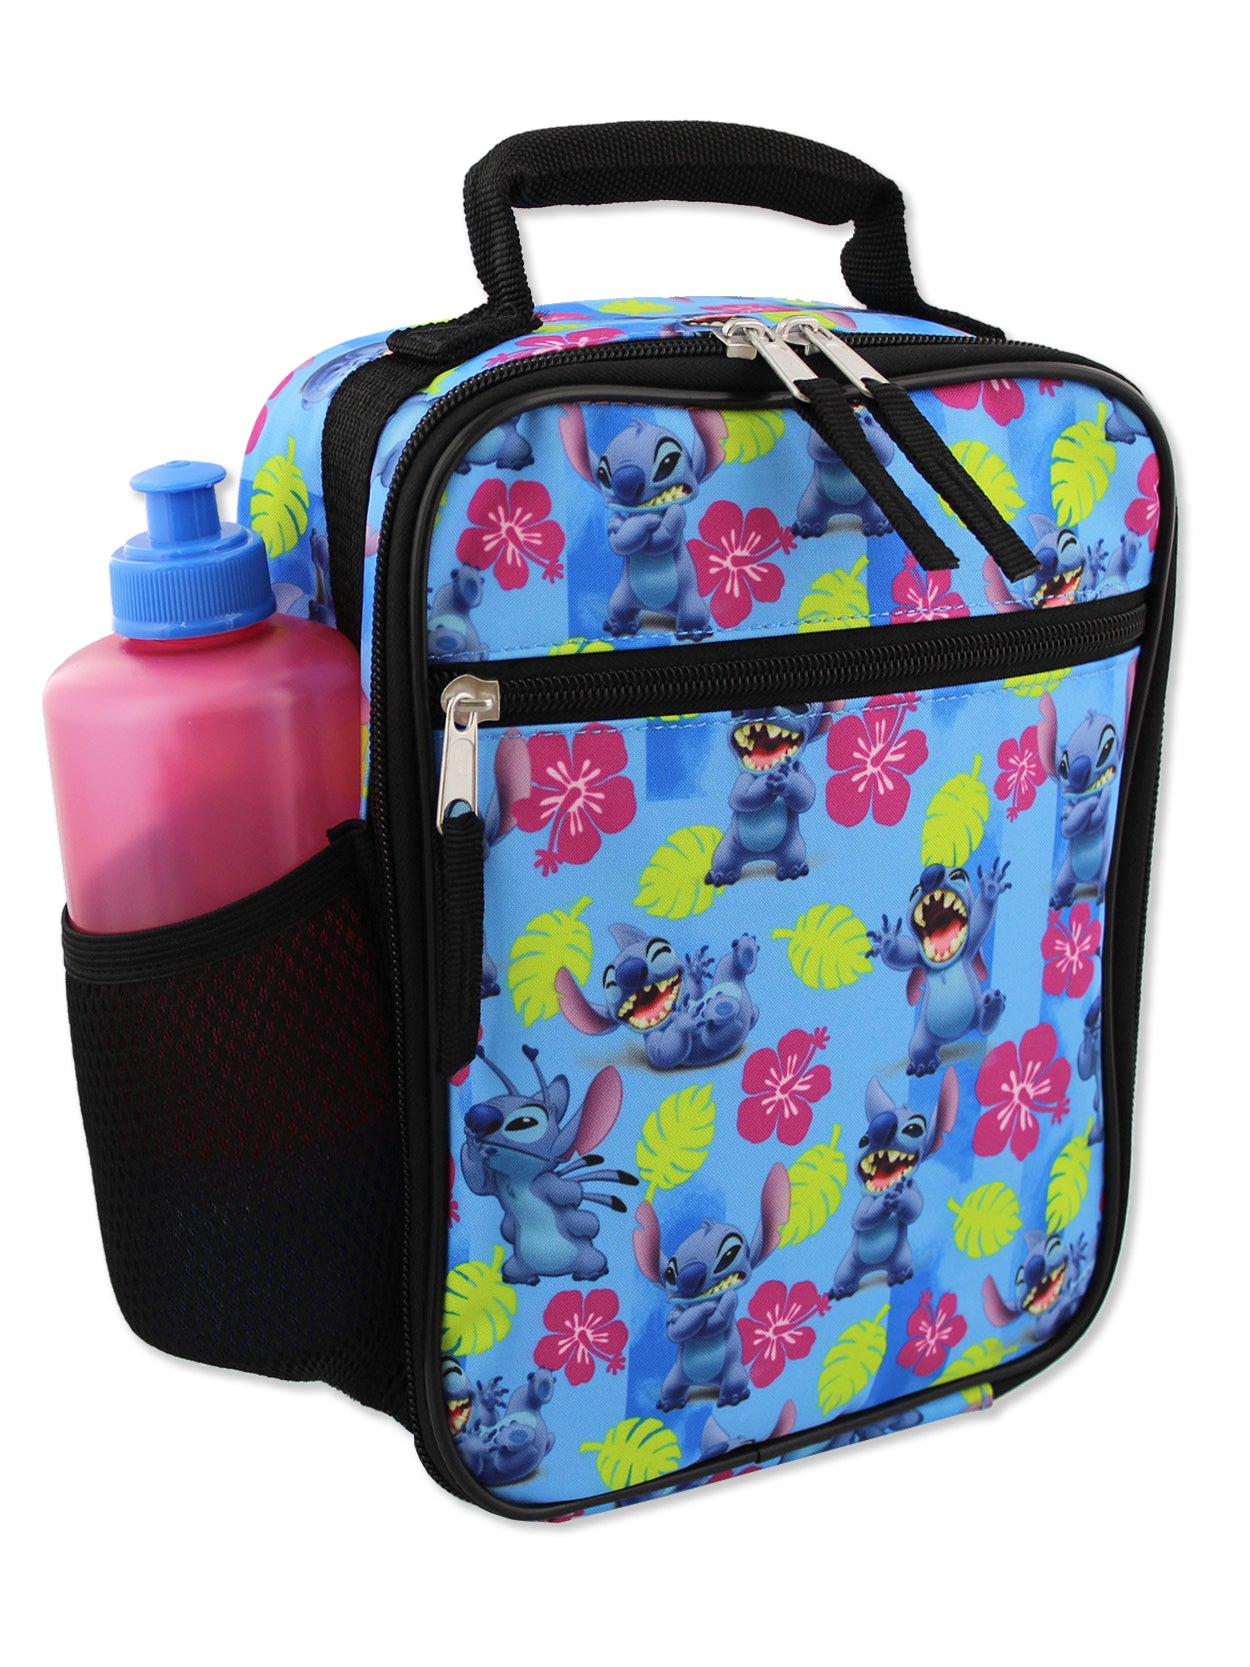 Stitch Lunch/ Cooler Bag!